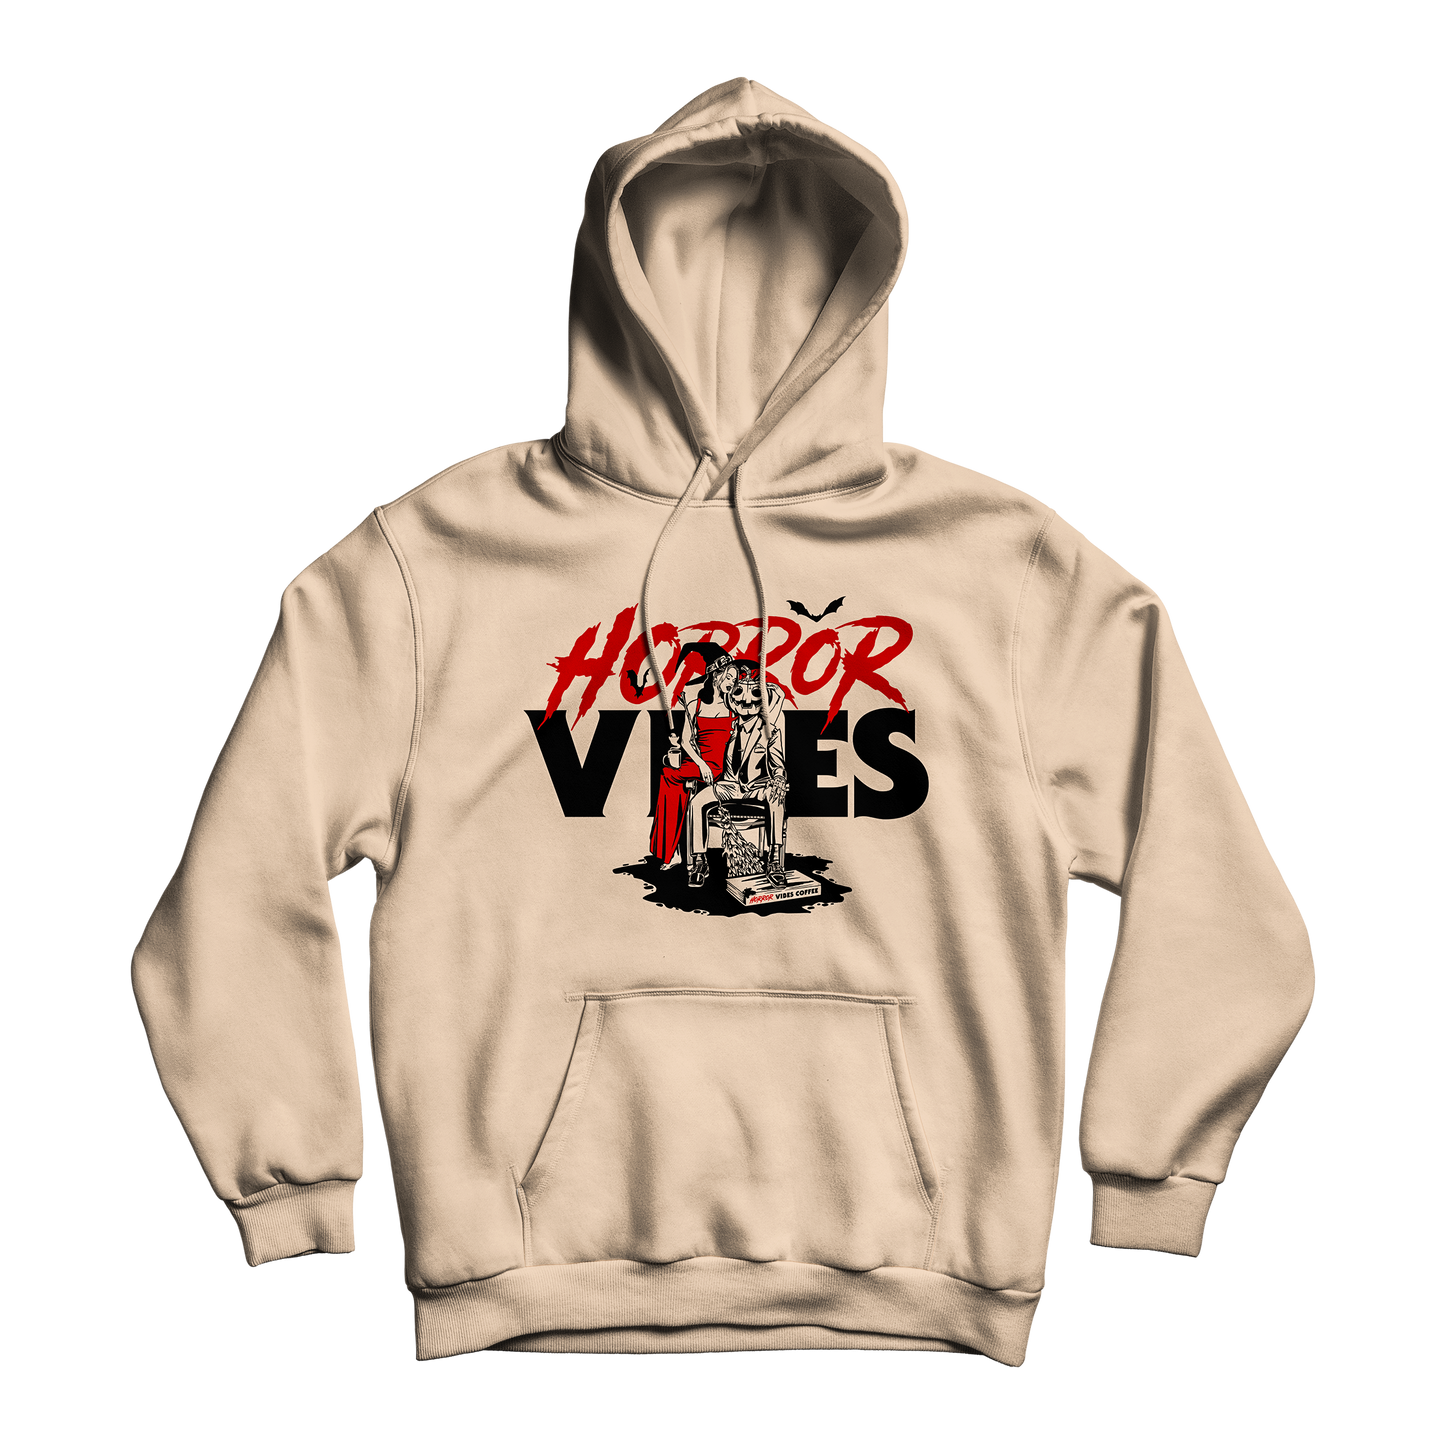 "HORROR VIBES" graphic sweatshirt